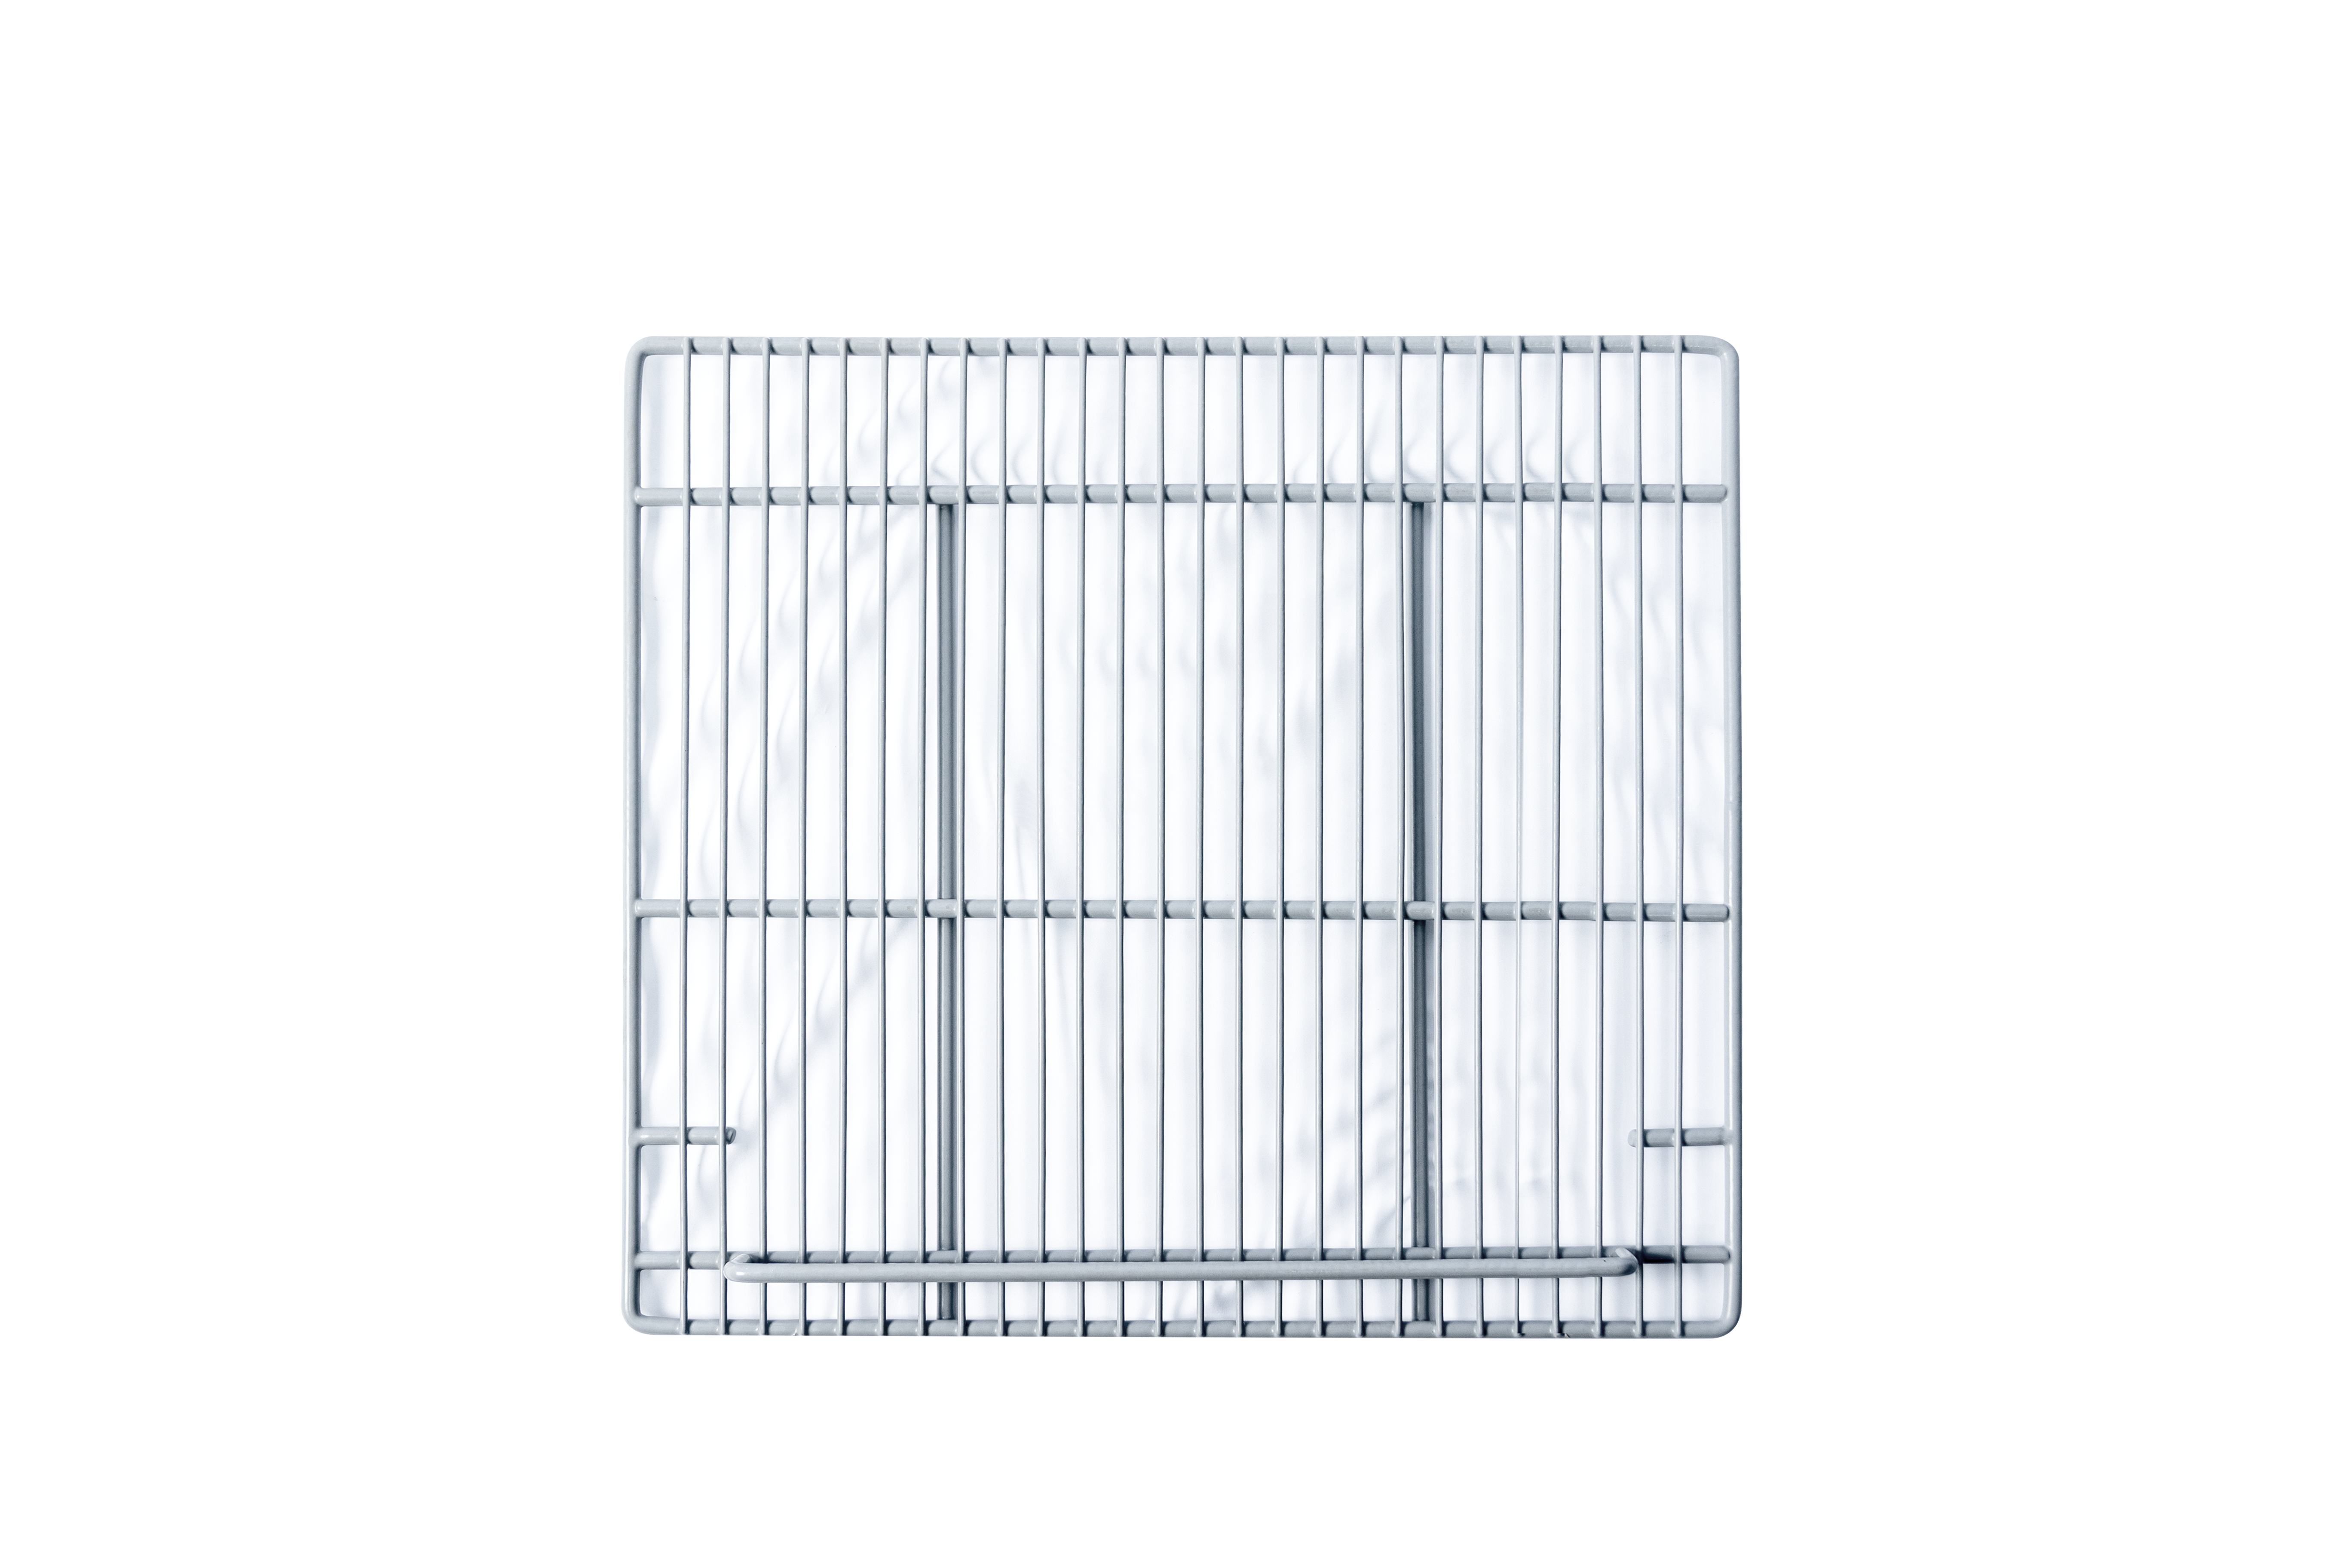 Adjustable Epoxy-coated Wire Shelf for TSSP48, TSSP72 (Left & Right) - Enhance Organization with Sturdy Utility Shelf - (Gray) Commercial Refrigerator Shelf